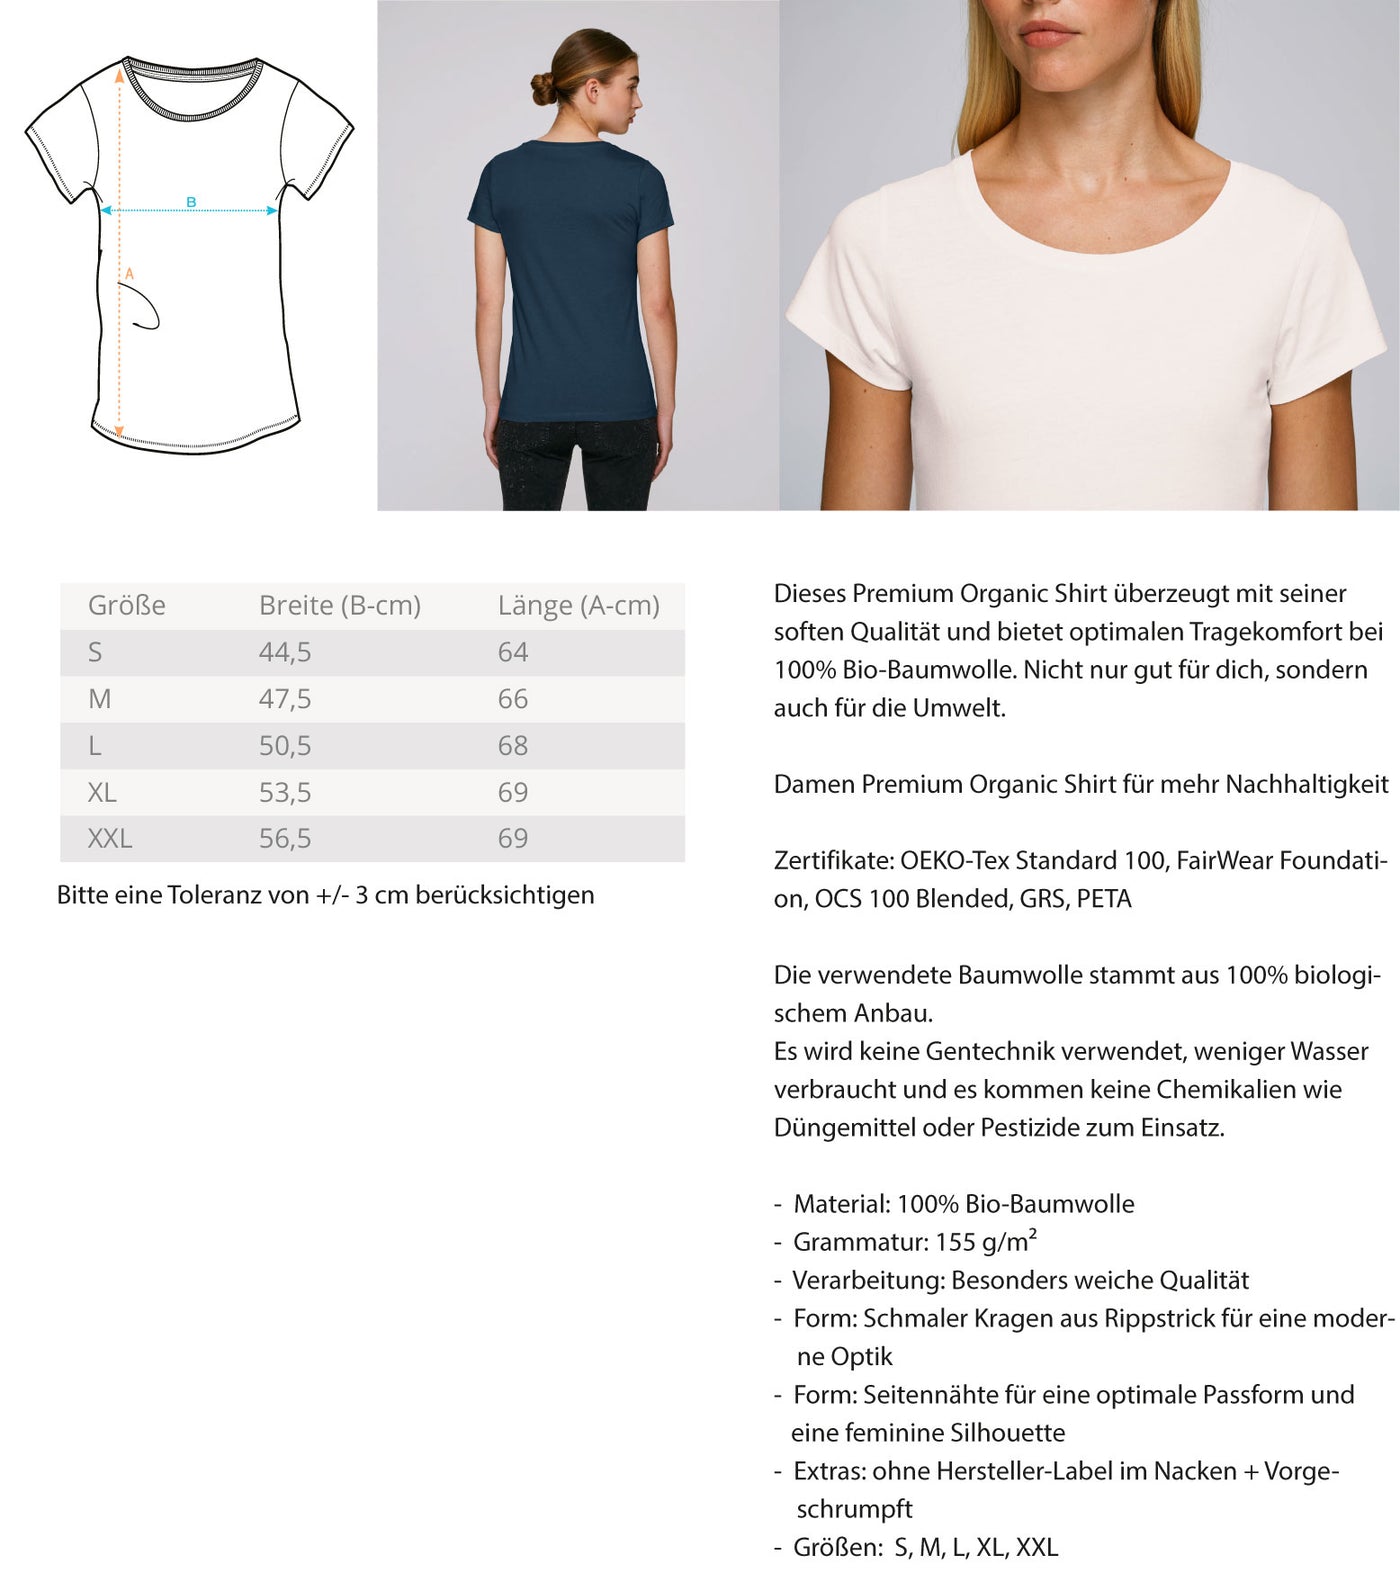 Herz für Berge - Damen Premium Organic T-Shirt berge